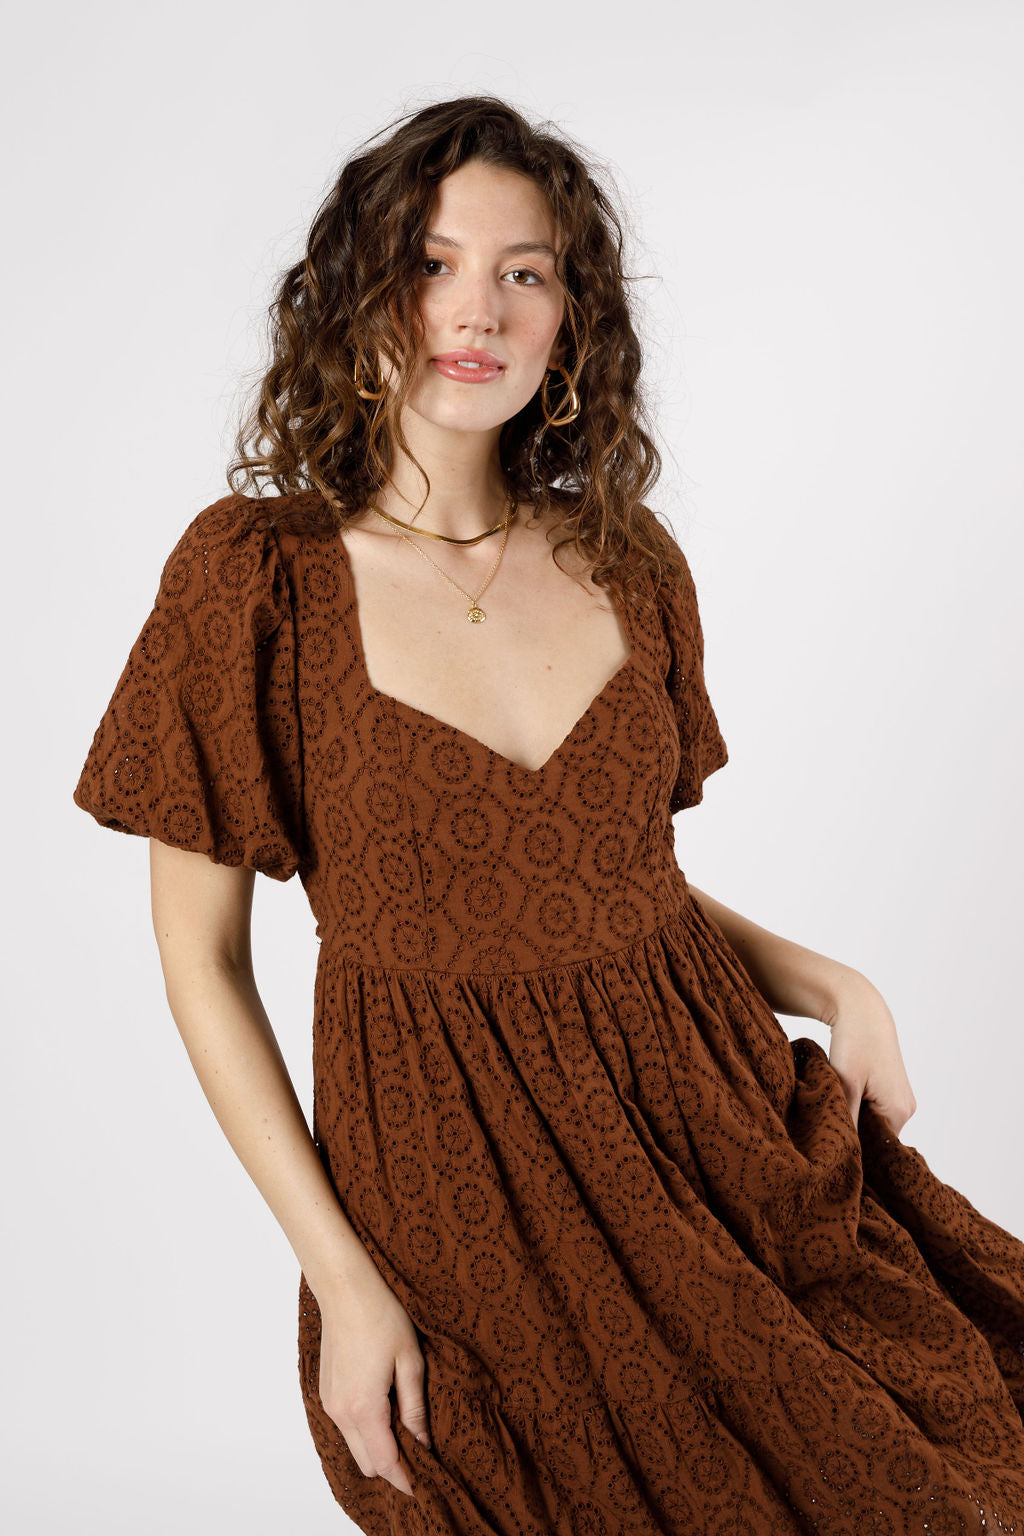 brown midi dress